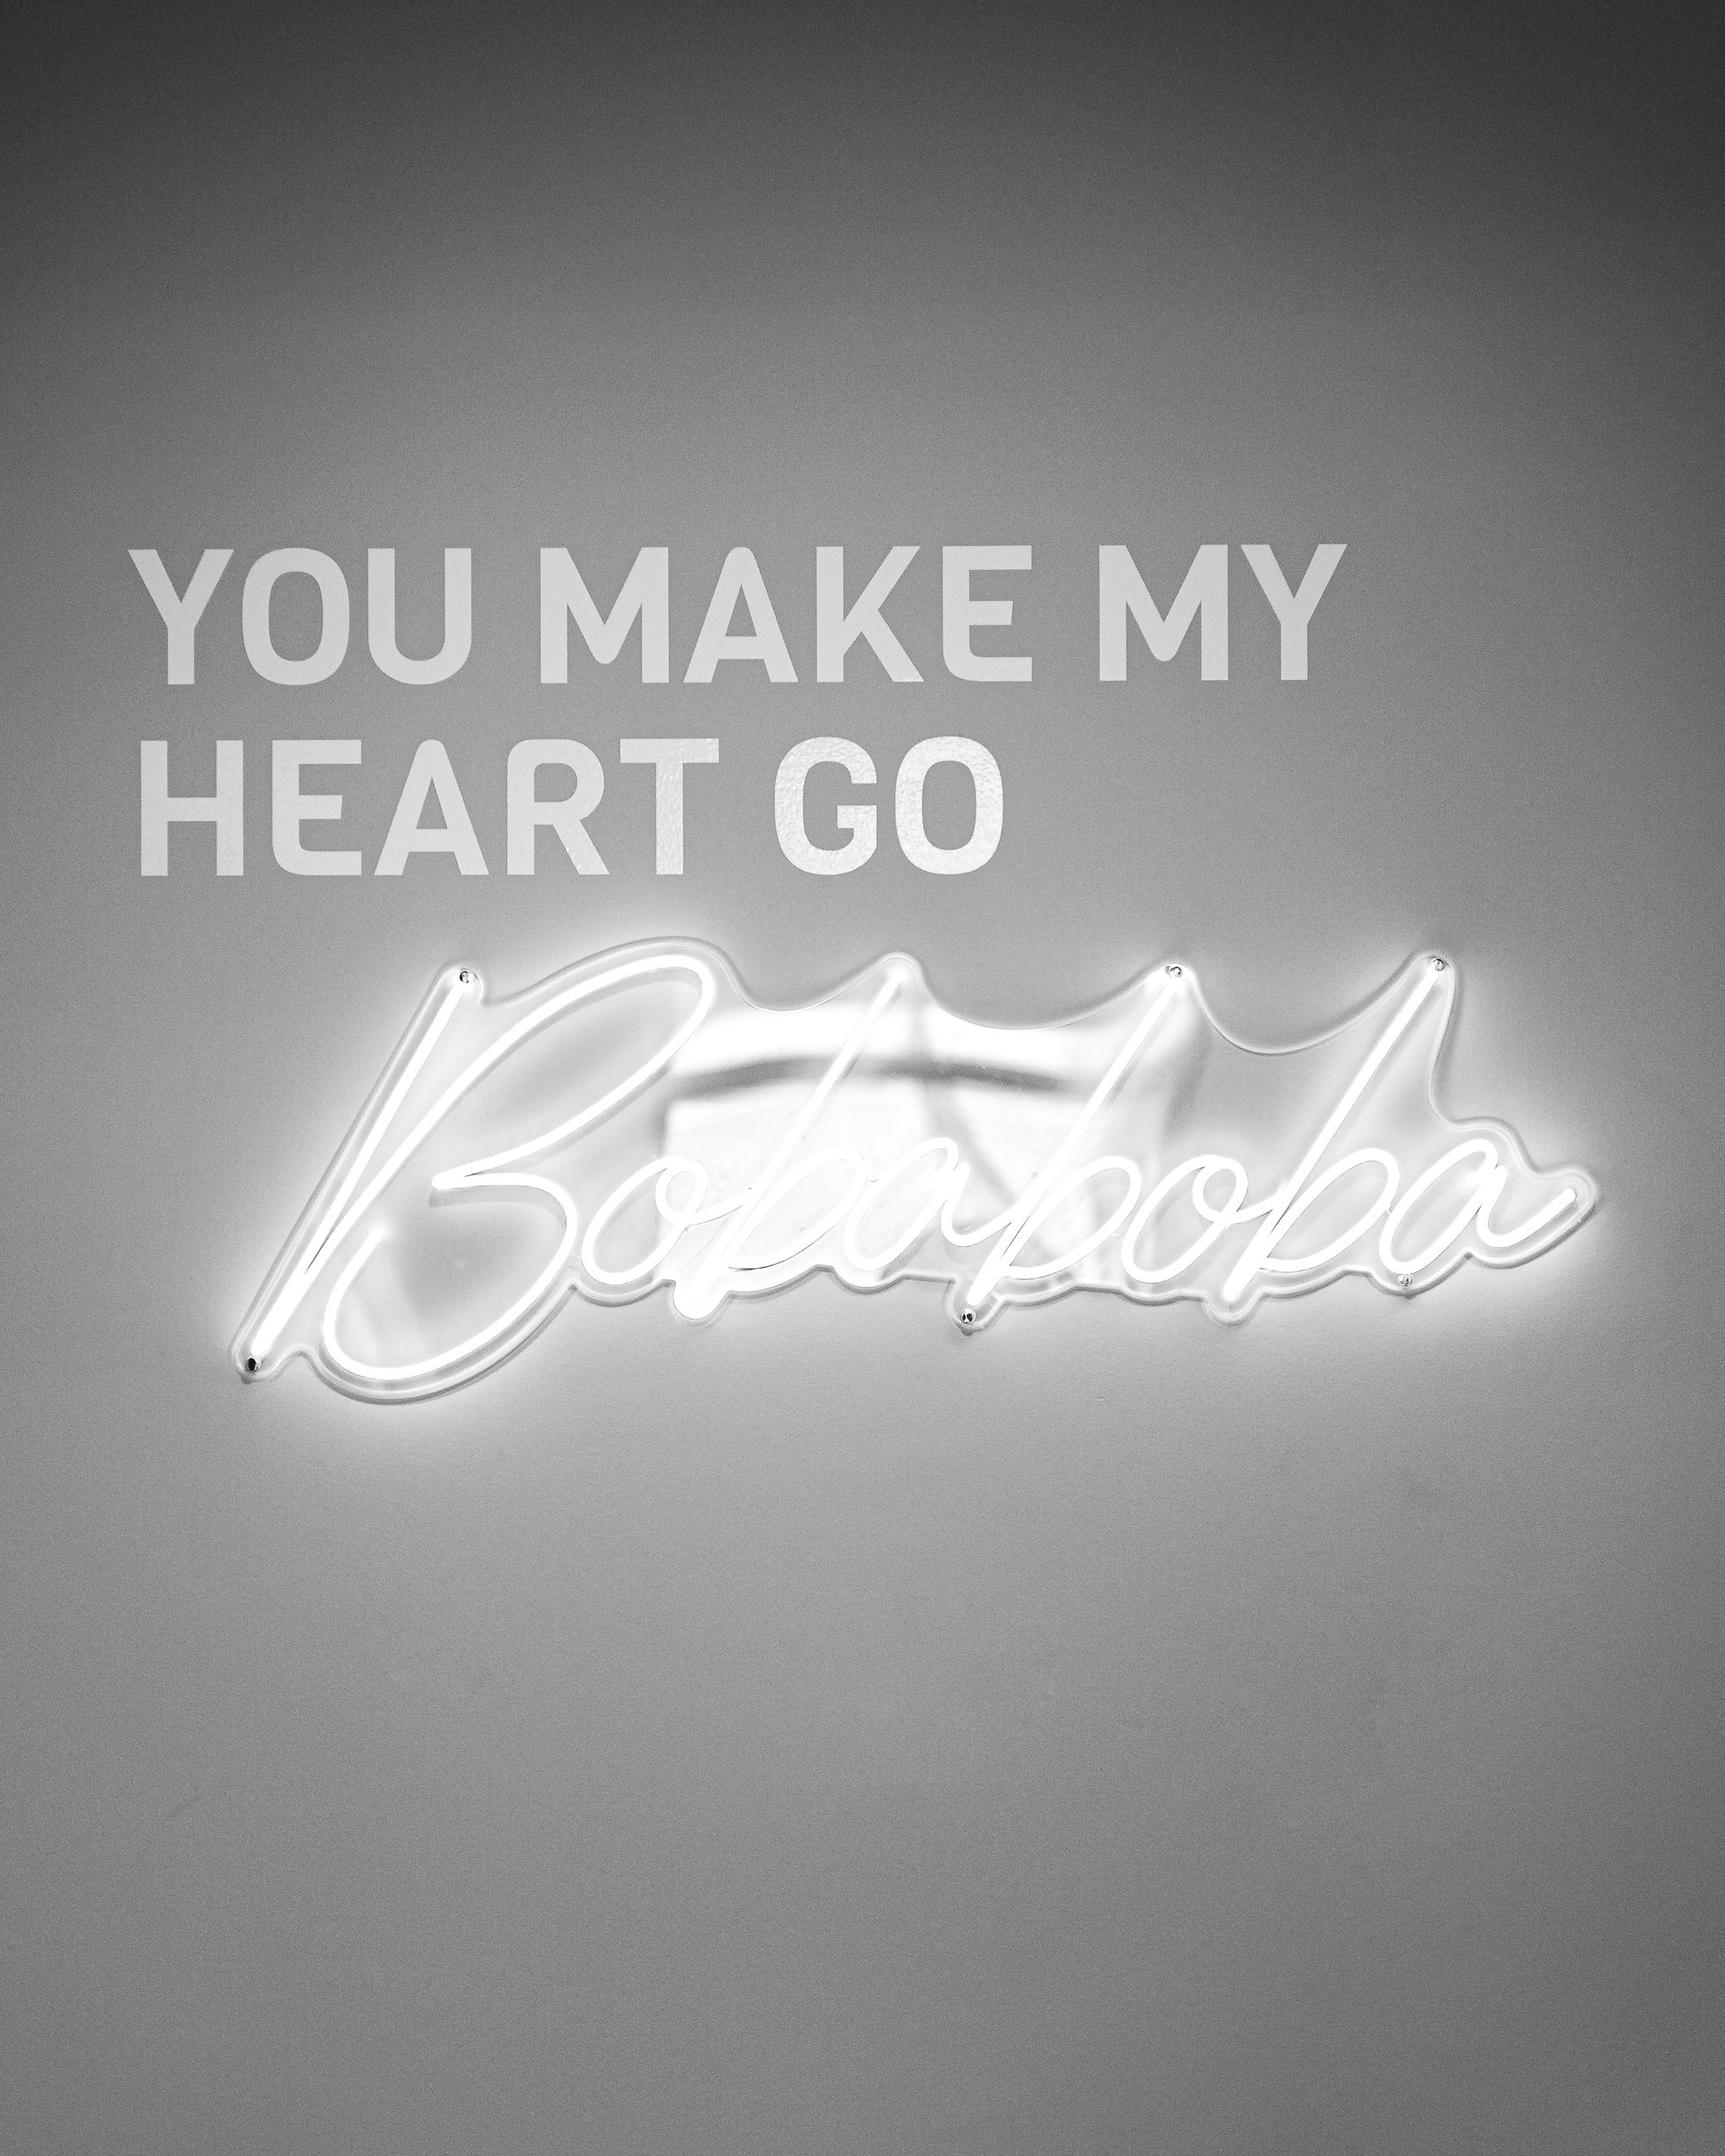 Neon sign saying "you make my heart go bobaboba"